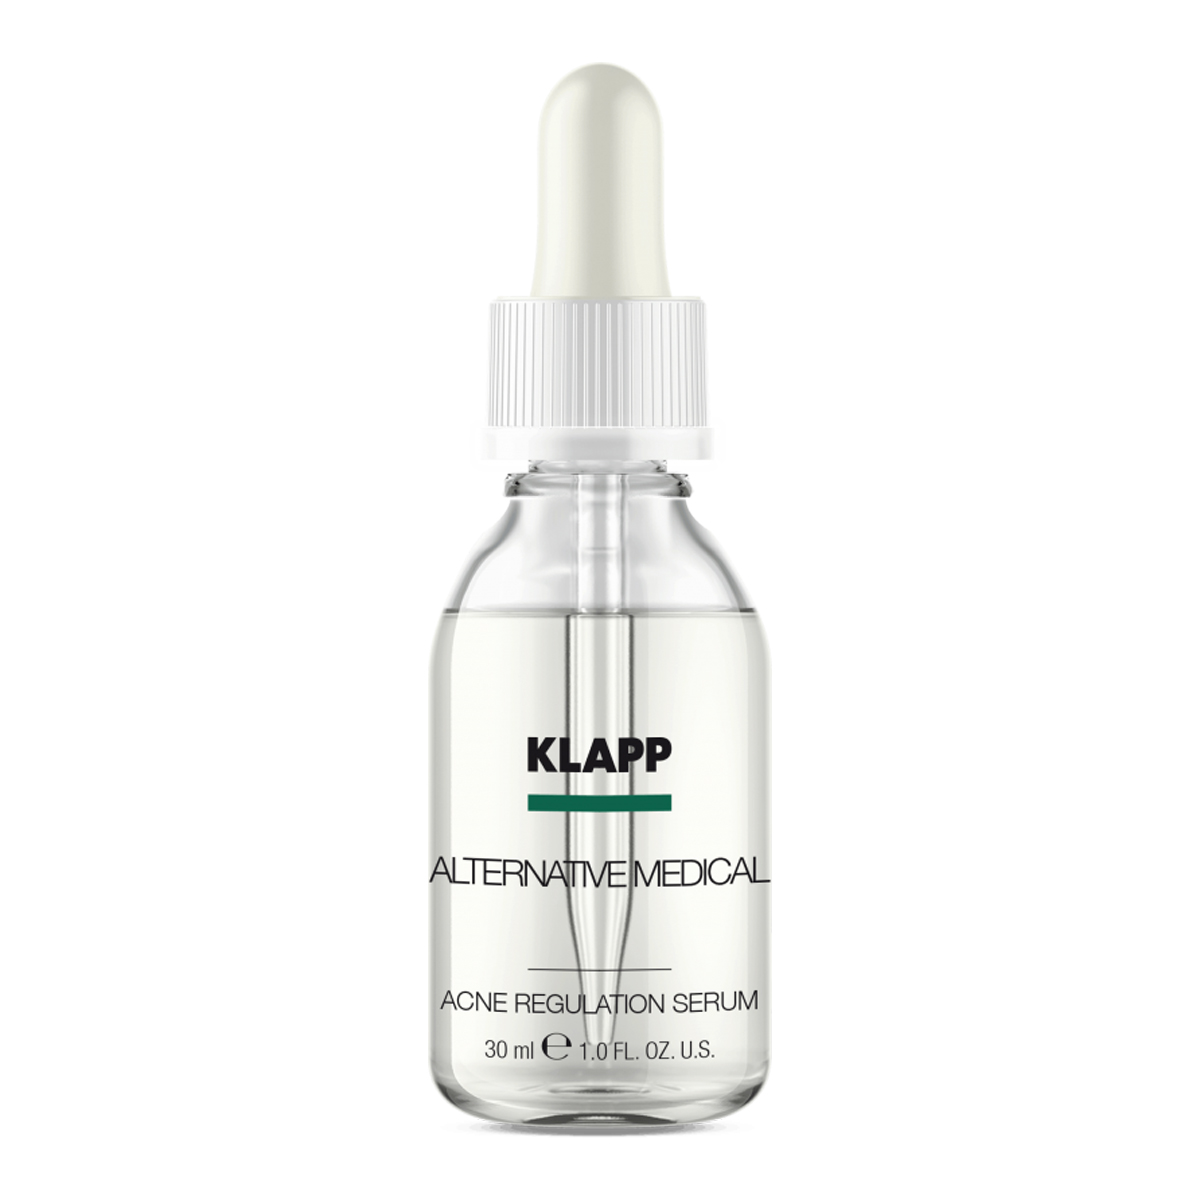 KLAPP Alternative Medical Acne Regulation Serum 30 ml